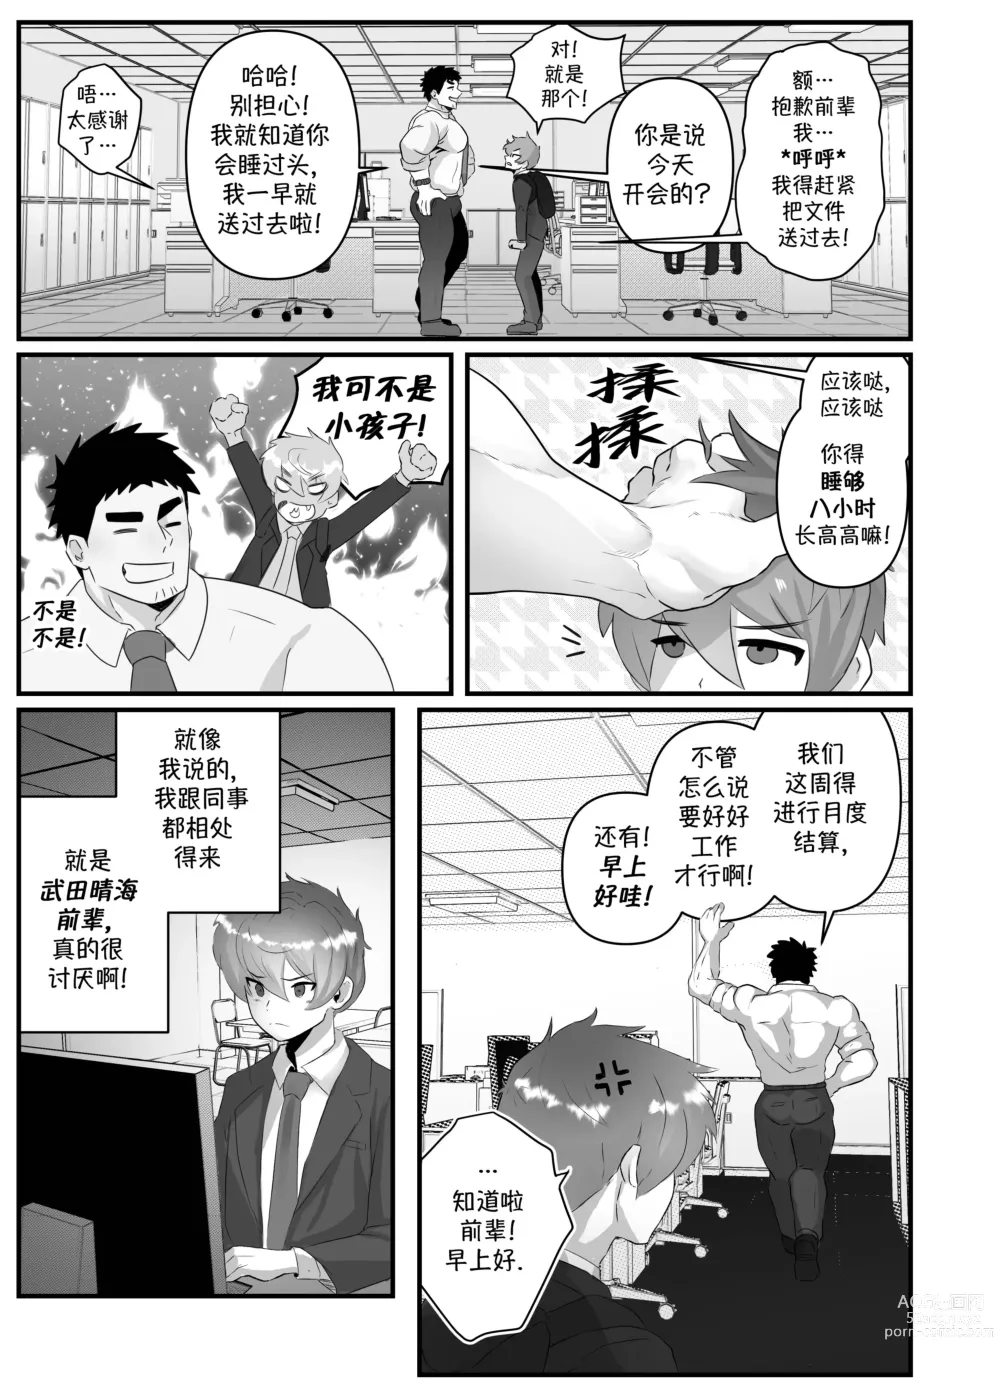 Page 7 of doujinshi  加班-和没那么烦人的前辈一起